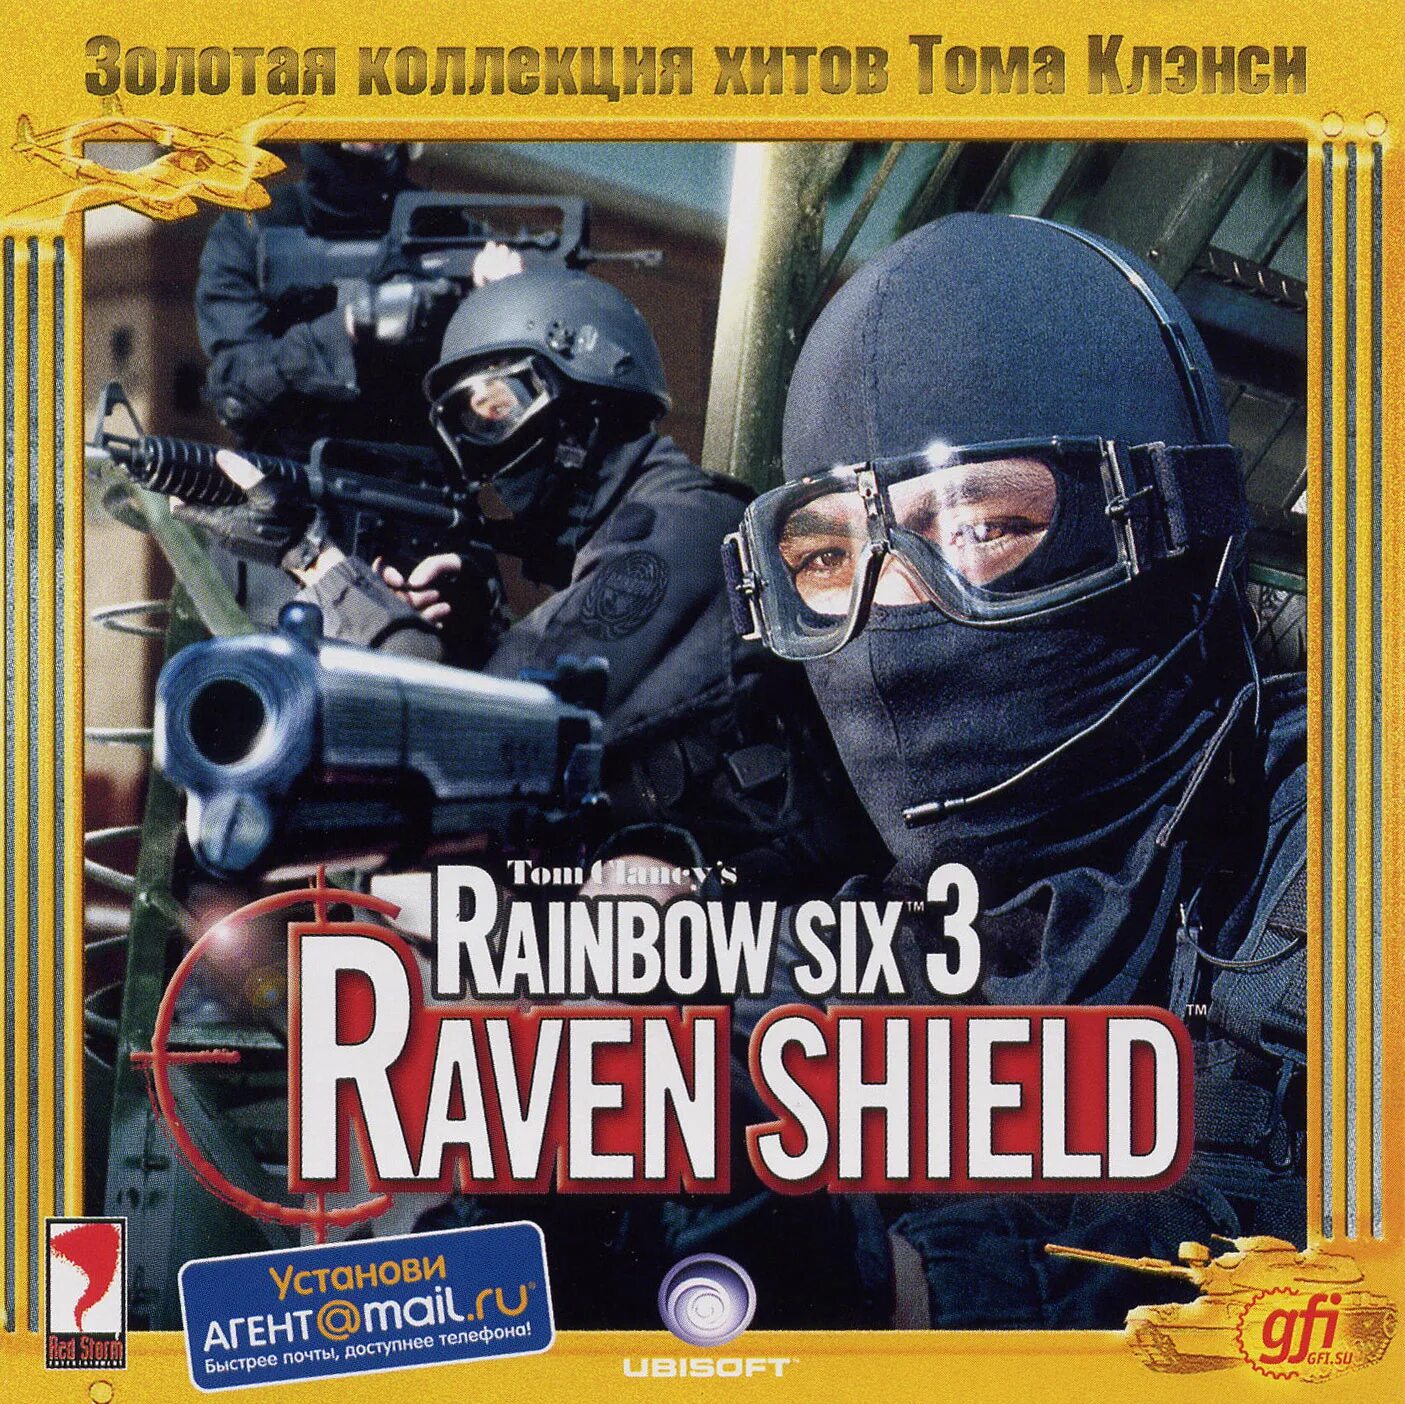 Tom Clancy’s Rainbow Six 3: Raven Shield. Rainbow Six 3 Raven Shield. Tom Clancys Rainbow Six 3 Raven Shield. Tom Clancys Rainbow Six 3 Raven Shield 2020.